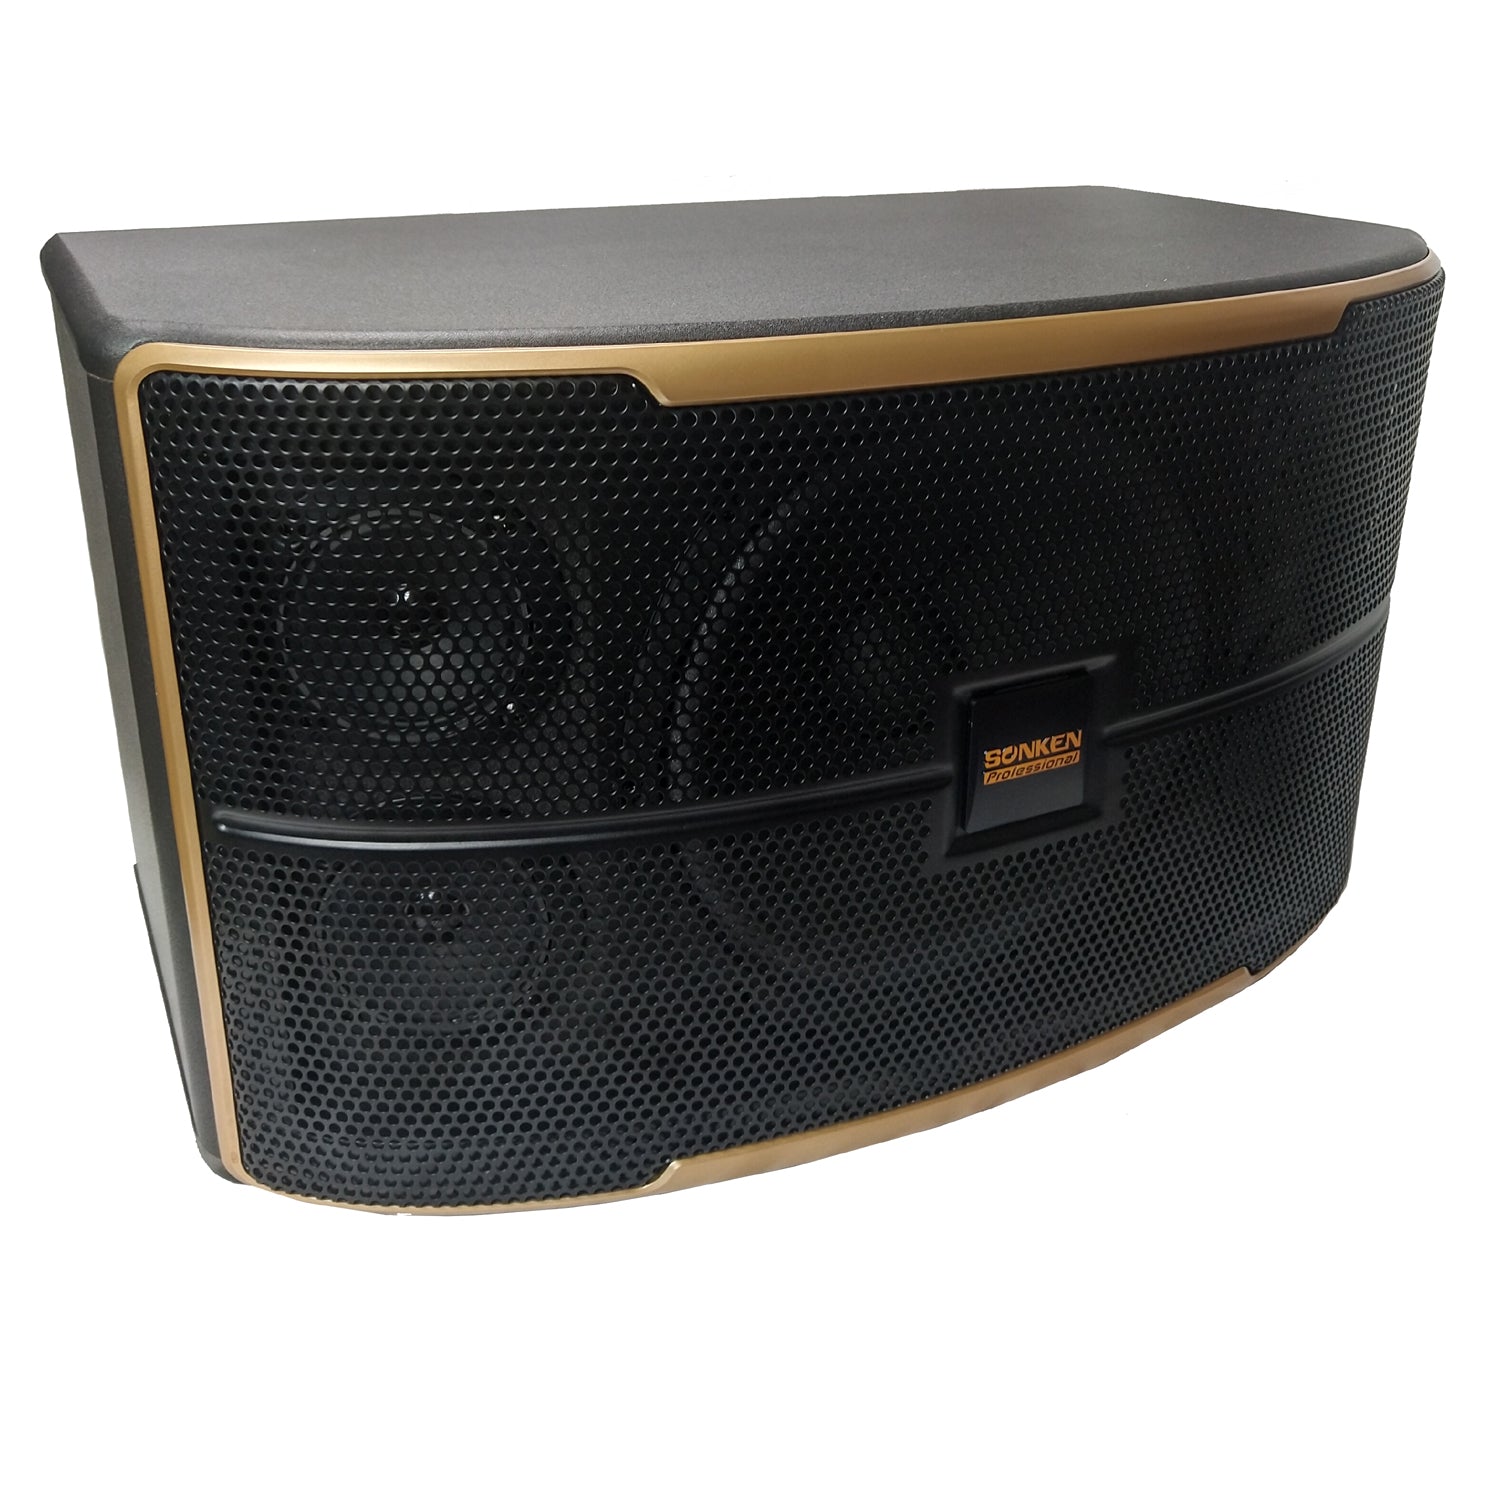 Sonken Home Karaoke Studio Package Deal (SA-767 Amp + CS-600 Speakers + WM-4000D Wireless Mics) - Karaoke Home Entertainment